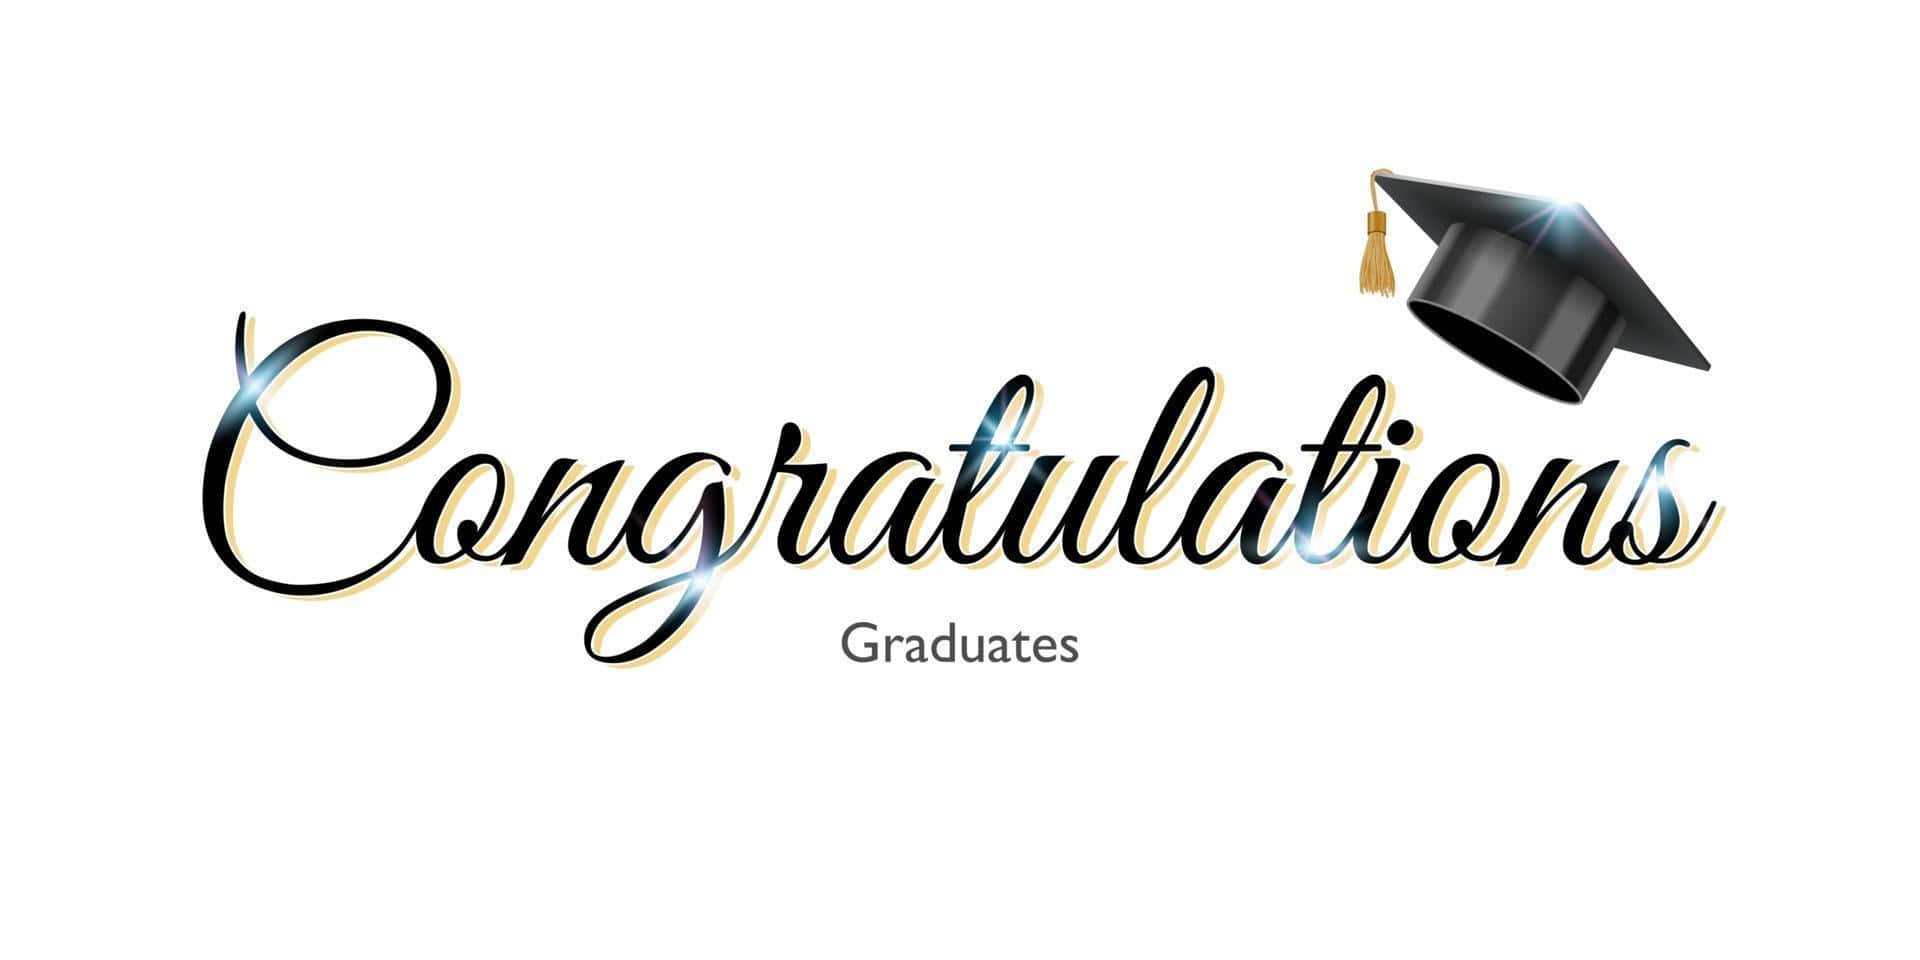 Congratulations Graduate Logo